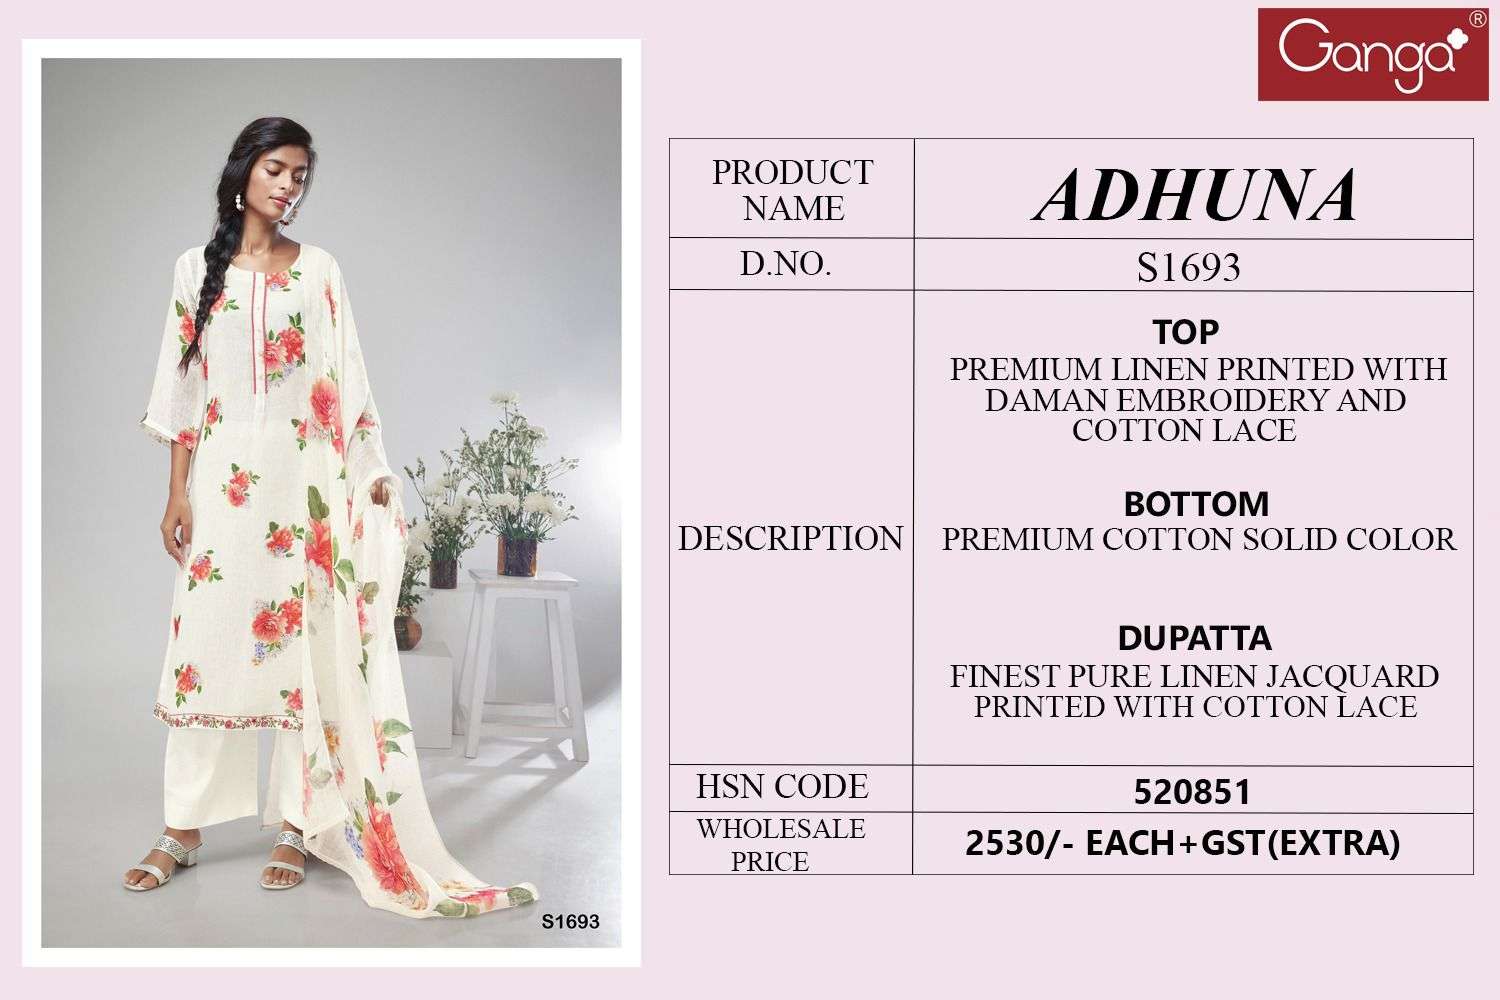 ganga adhuna 1693 fancy floral print premium ladies suit catalog supplier 3 2023 05 05 16 25 33